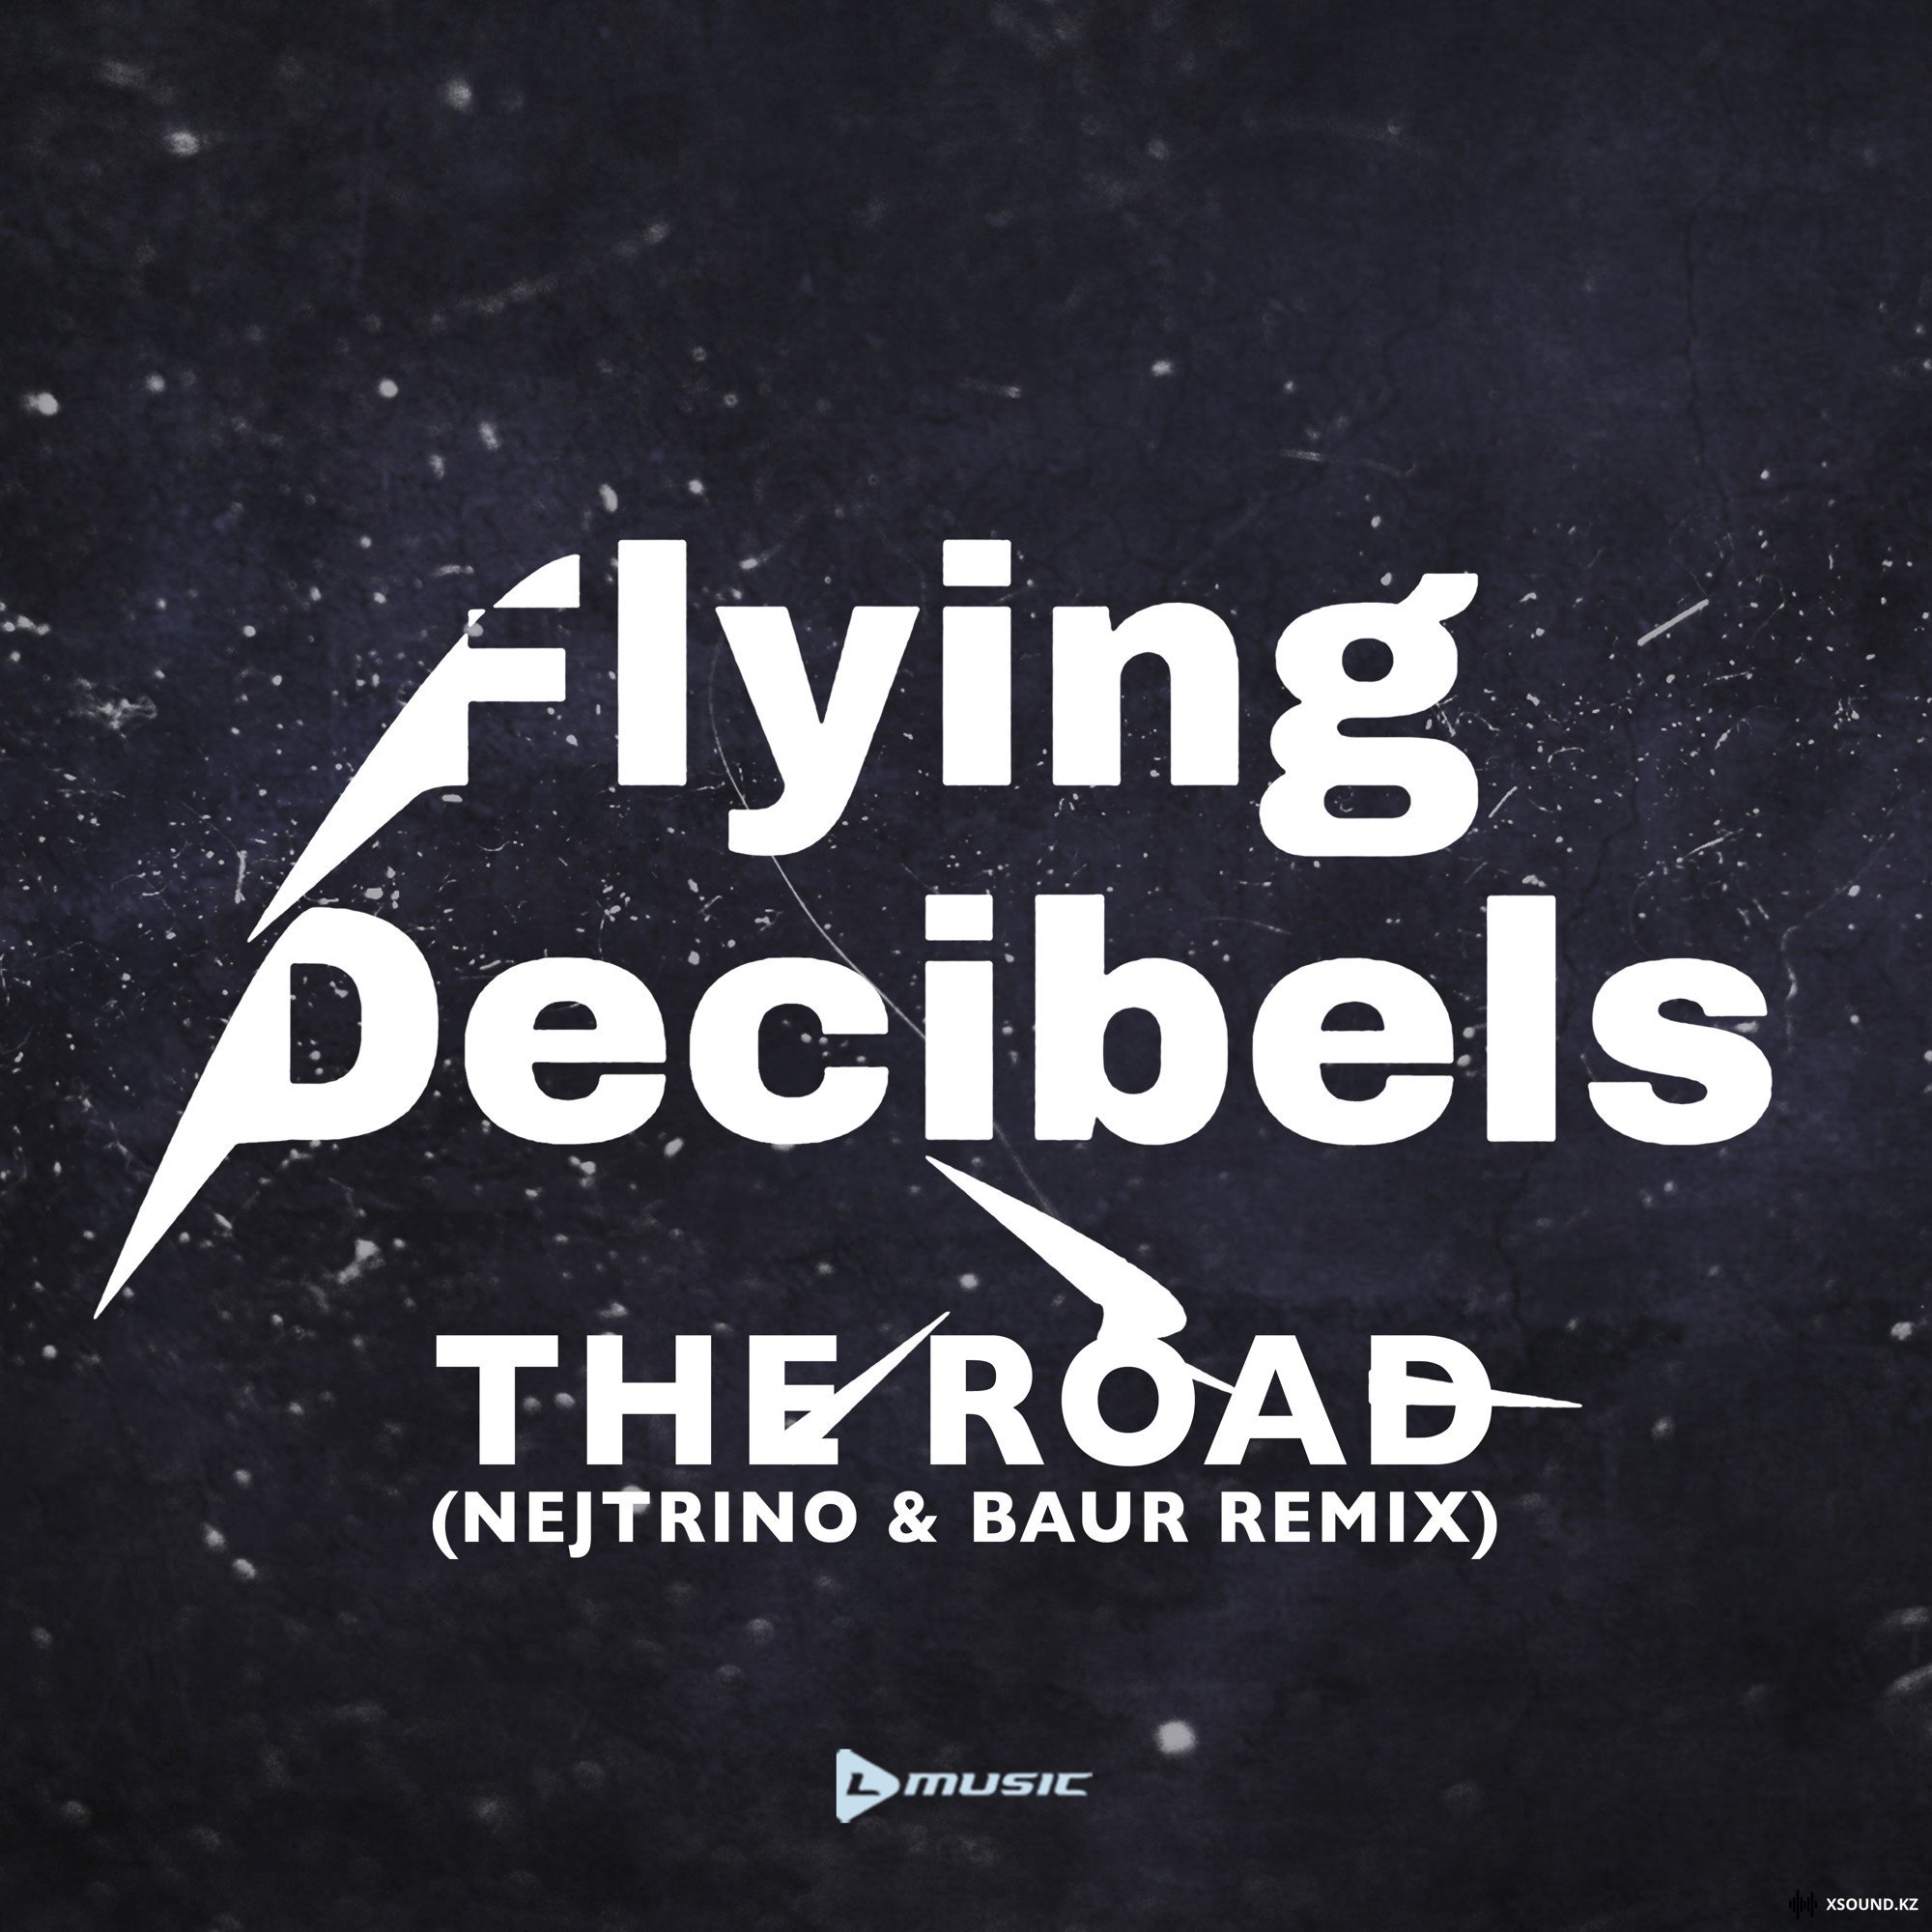 Музыка В Машину 2018 - Flying Decibels - The Road (Effective Radio Remix)